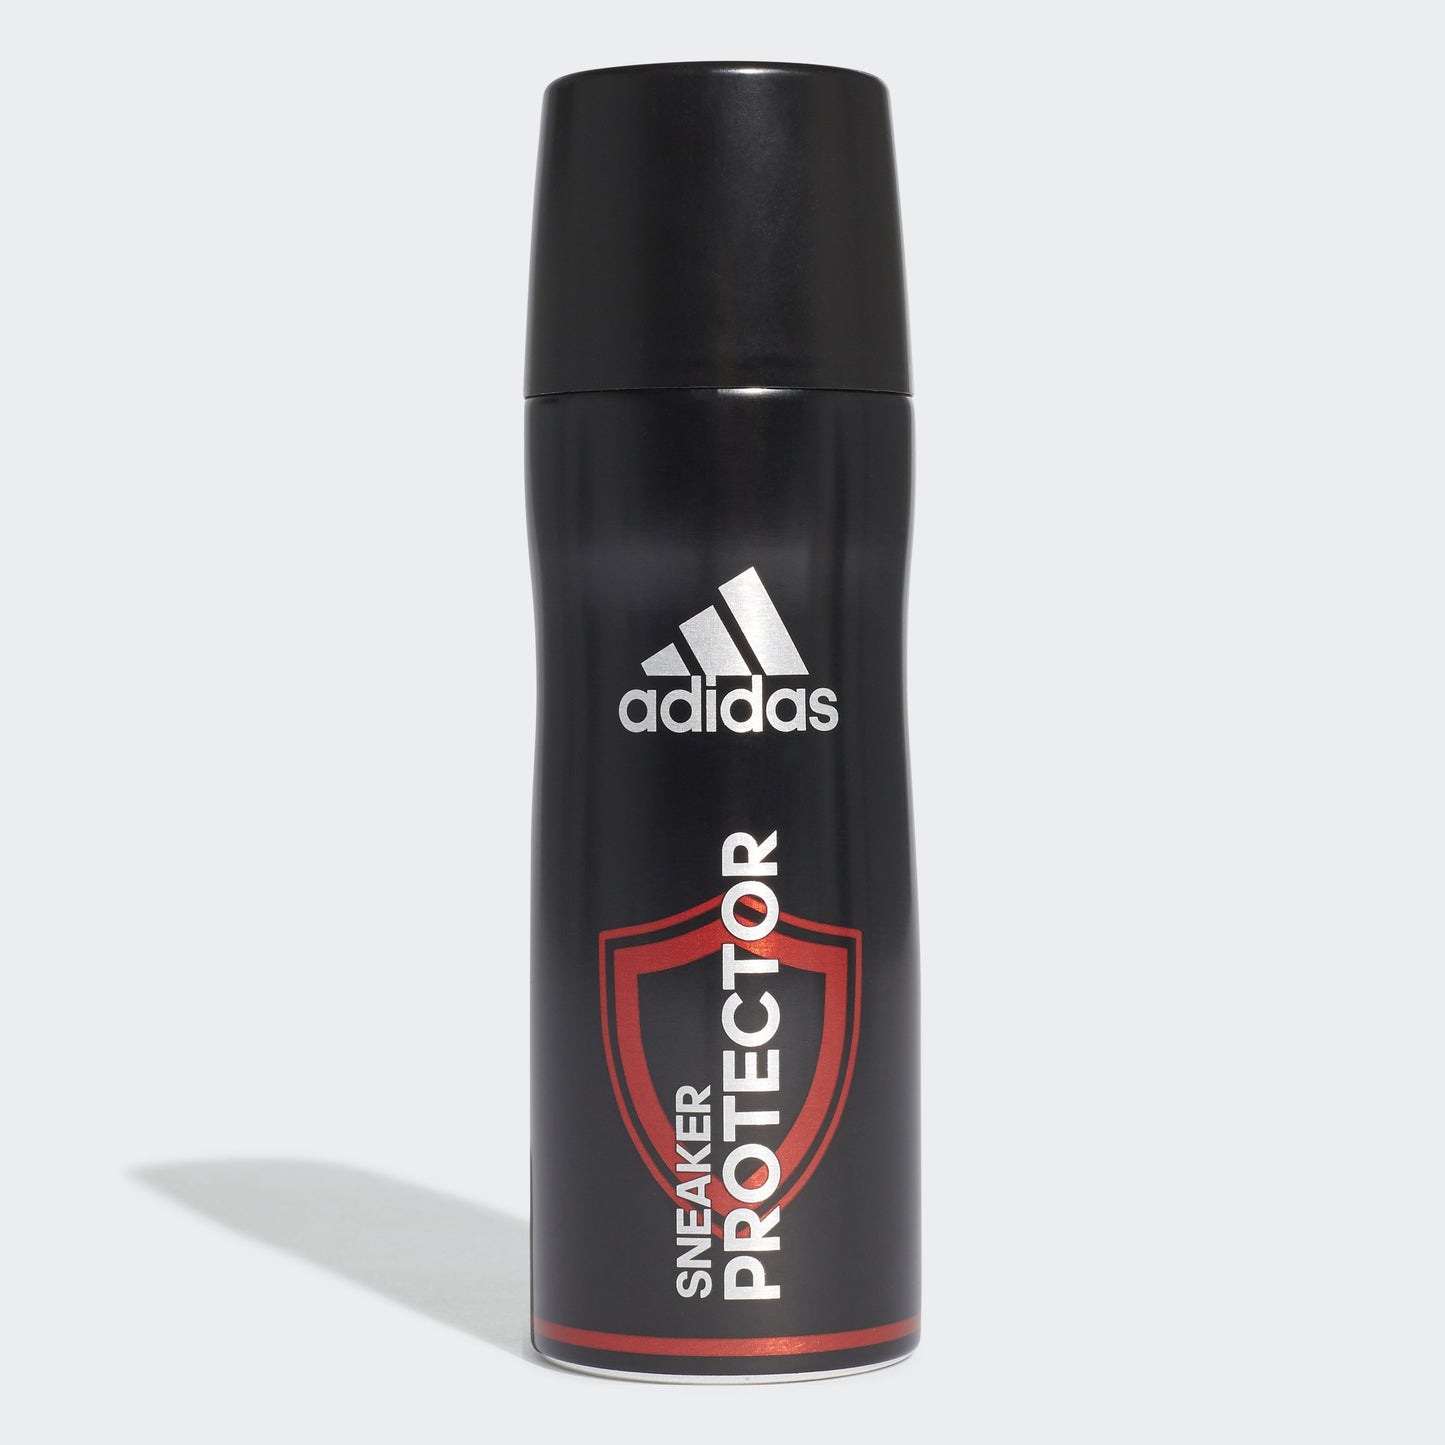 Adidas Sport Shoe Protector Spray 200ml (black)